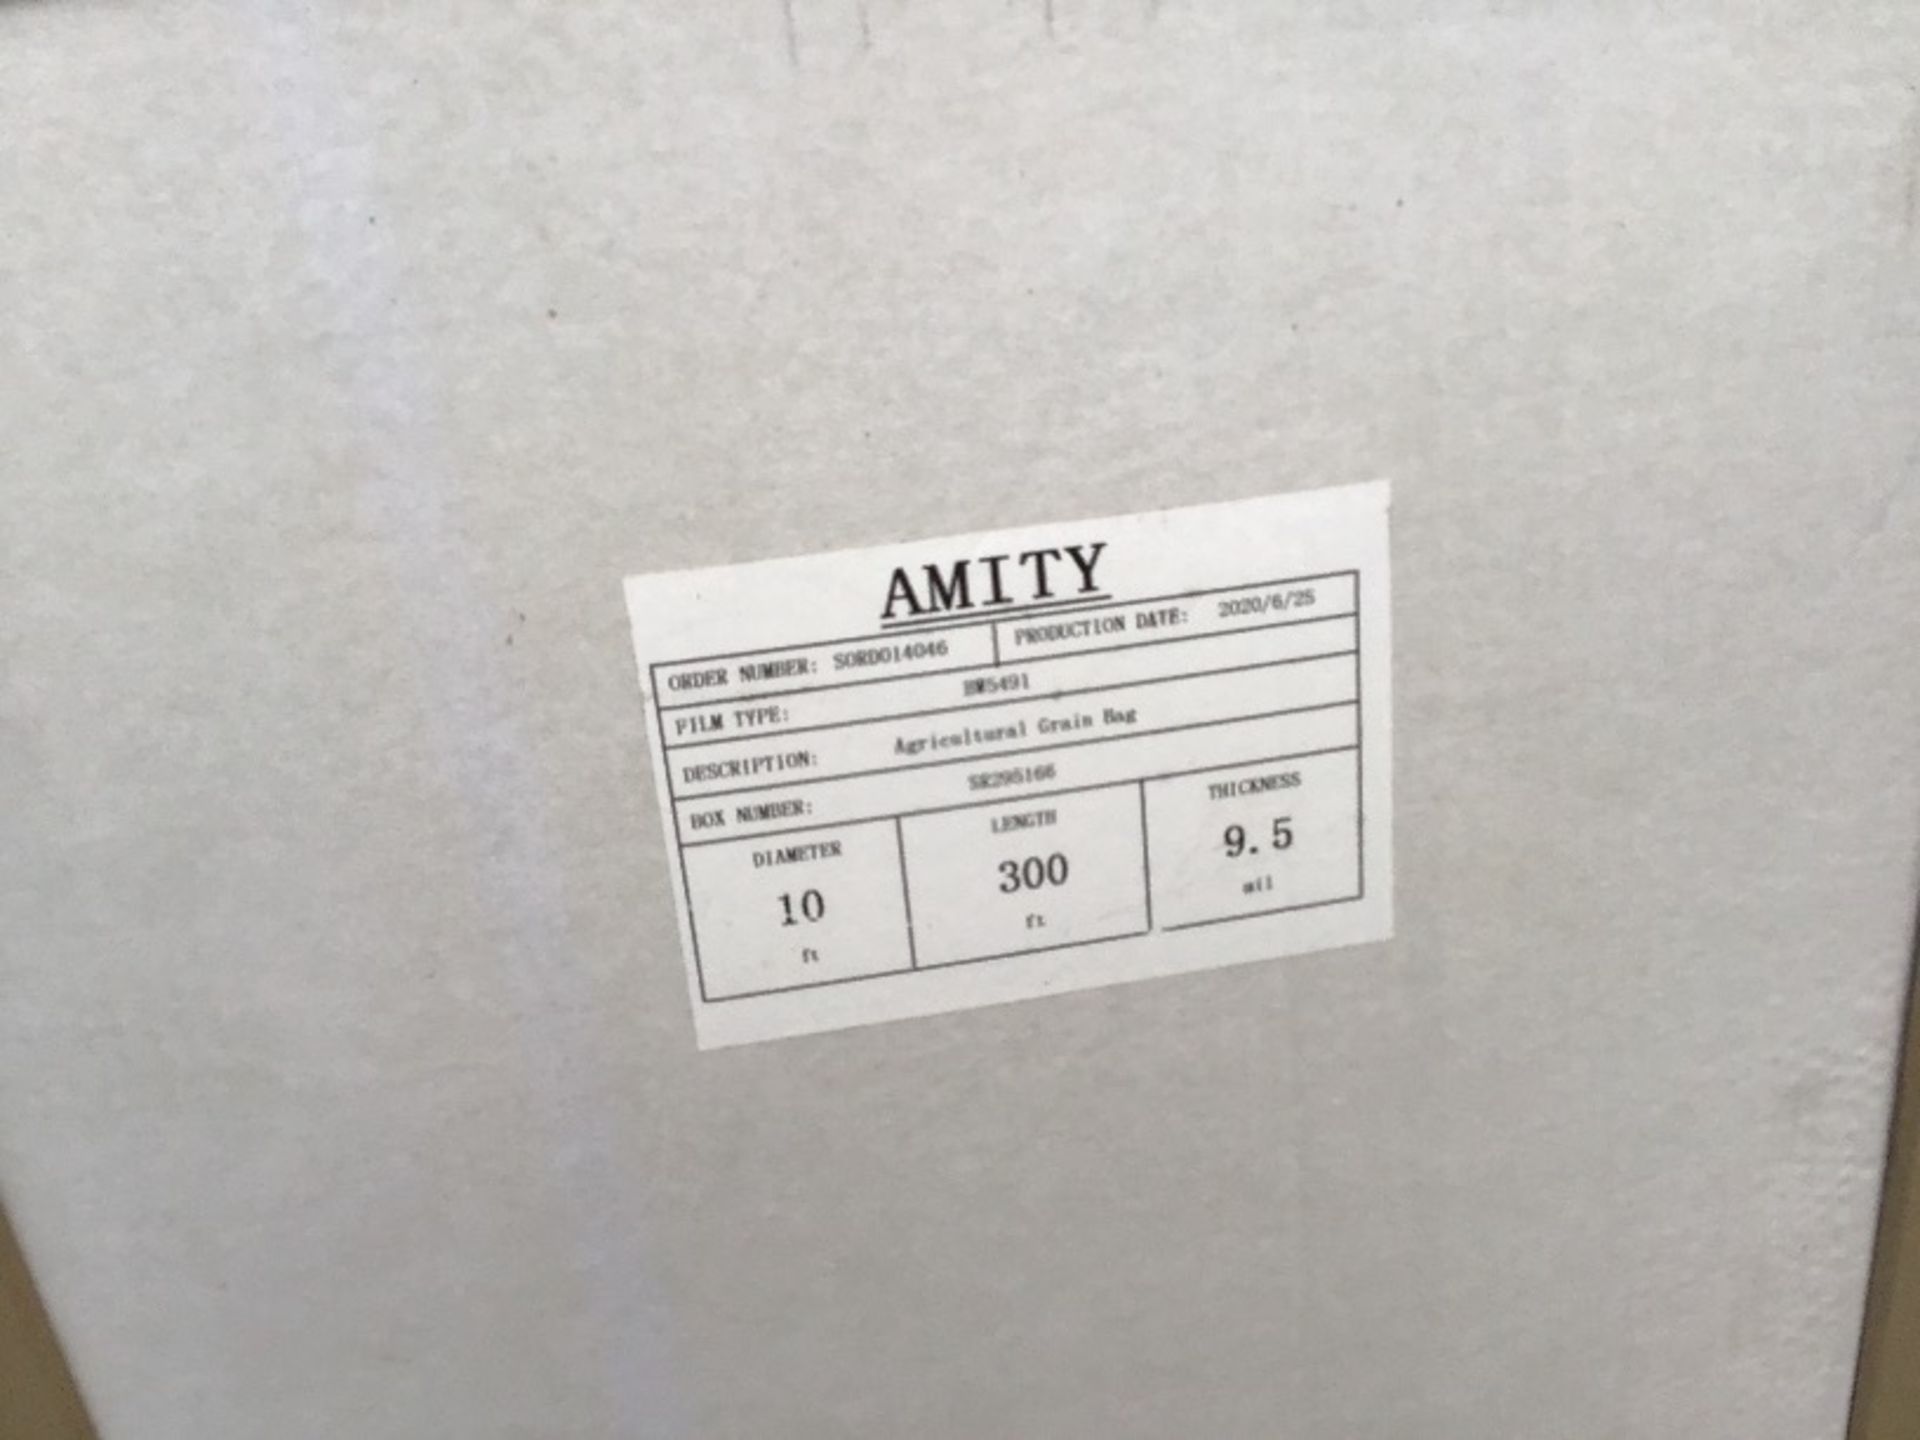 300Ft X 10Ft X 9.5mm Amity Grain Bag - Image 2 of 2